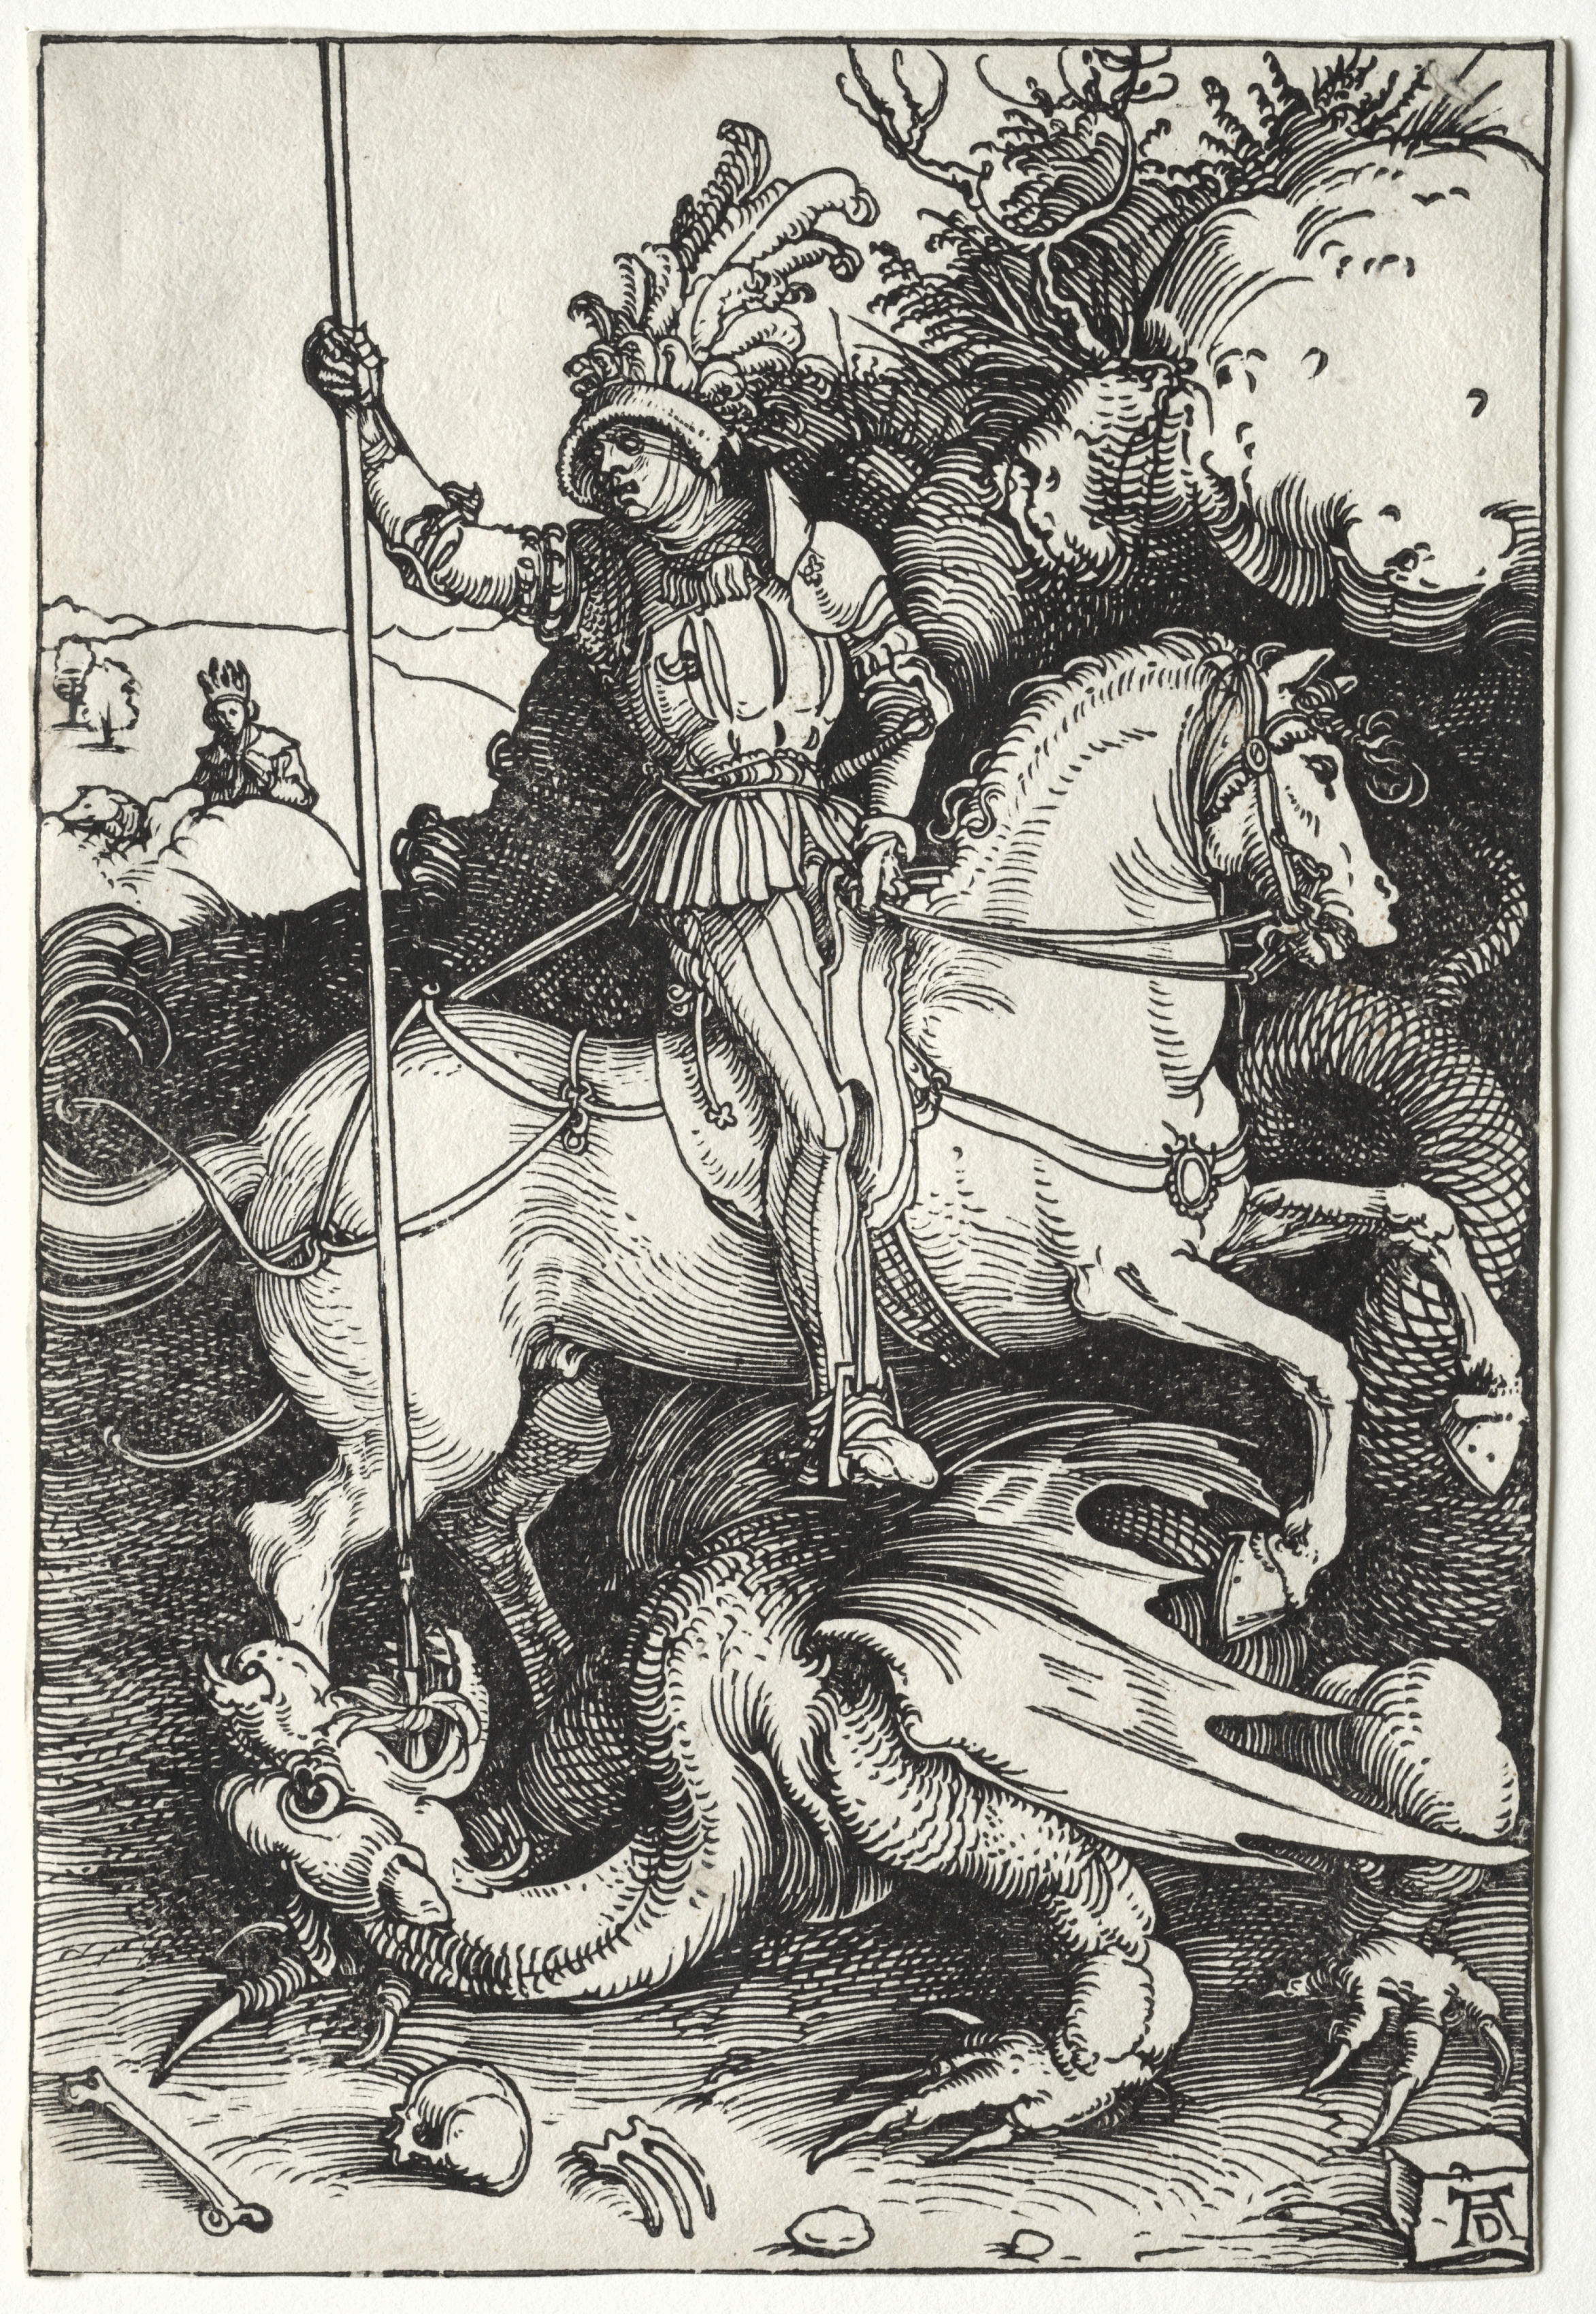 St. George Killing the Dragon